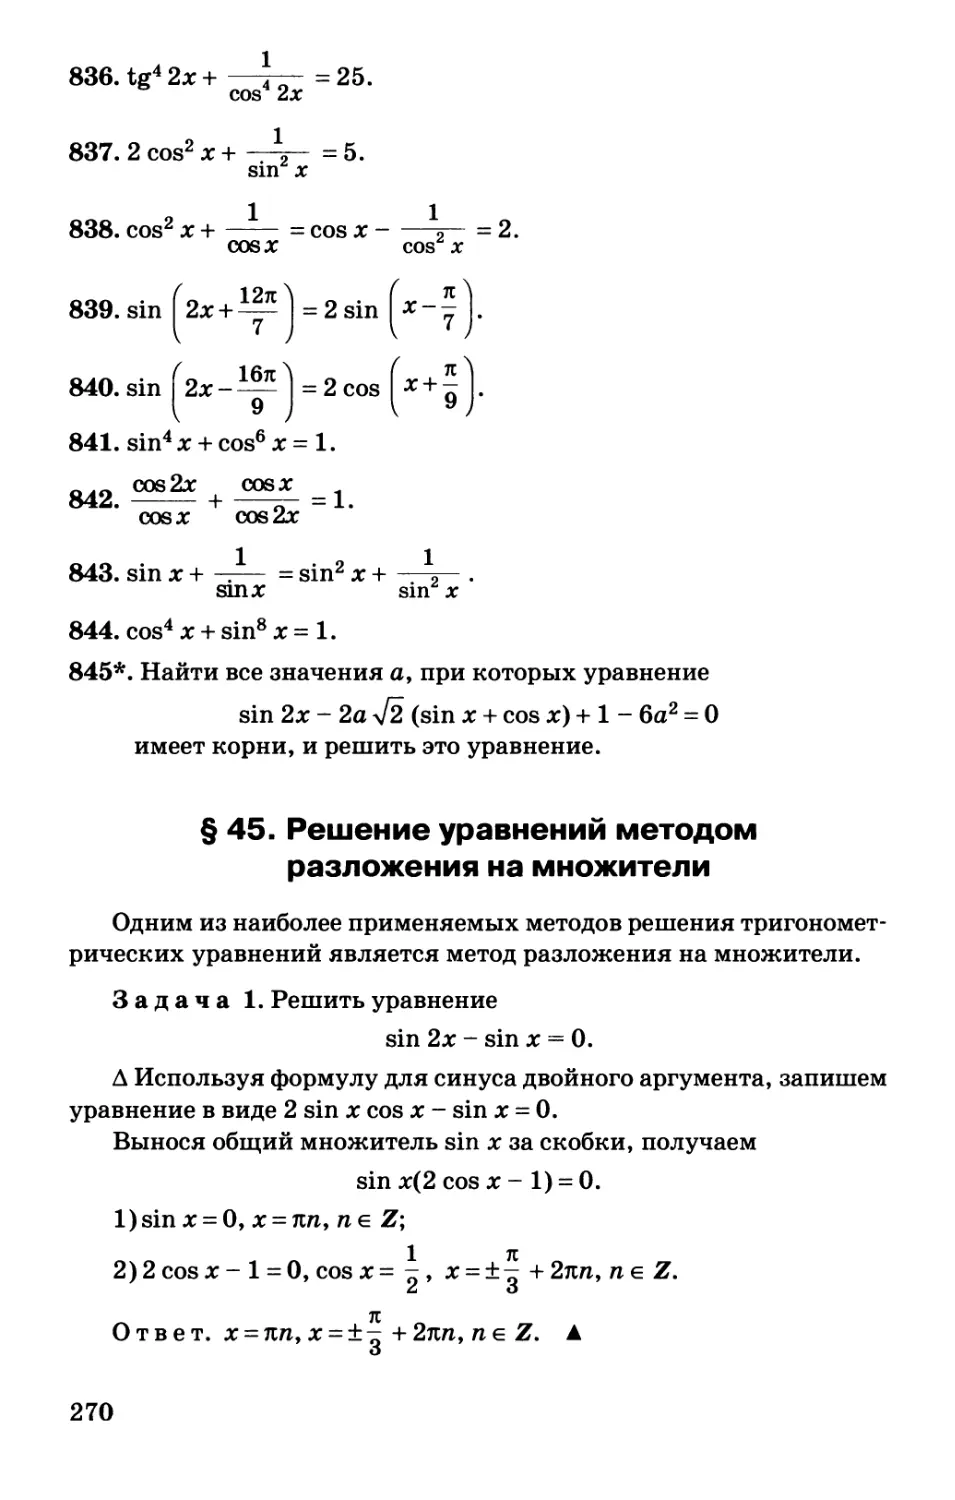 § 45. Решение уравнений методом разложения на множители